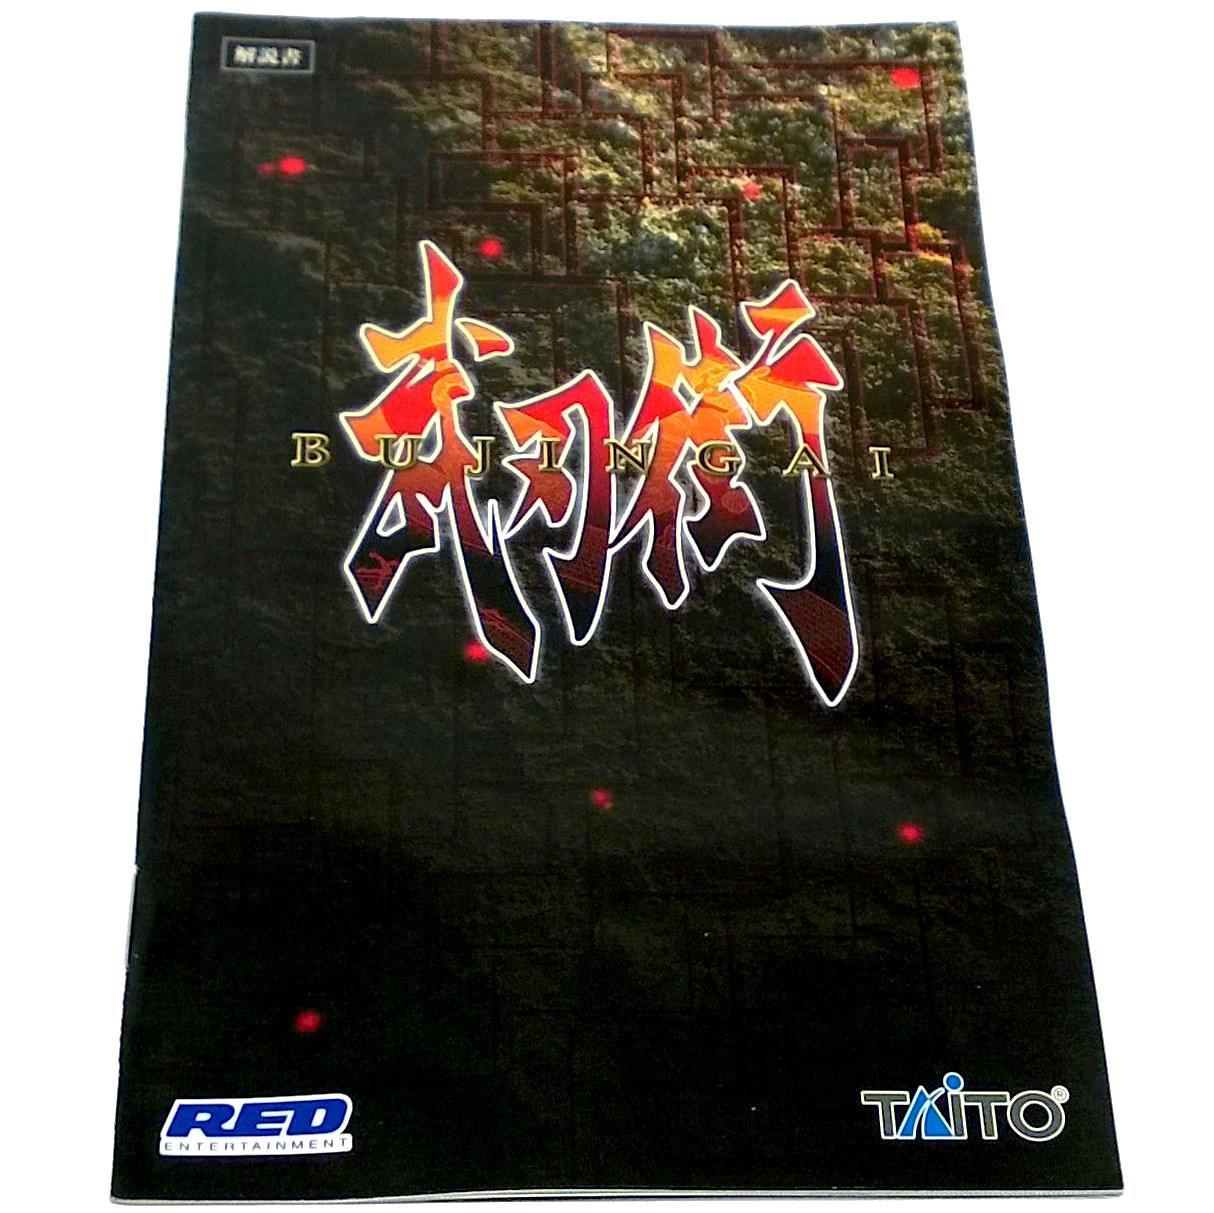 Bujingai for PlayStation 2 (Import) - Front of manual